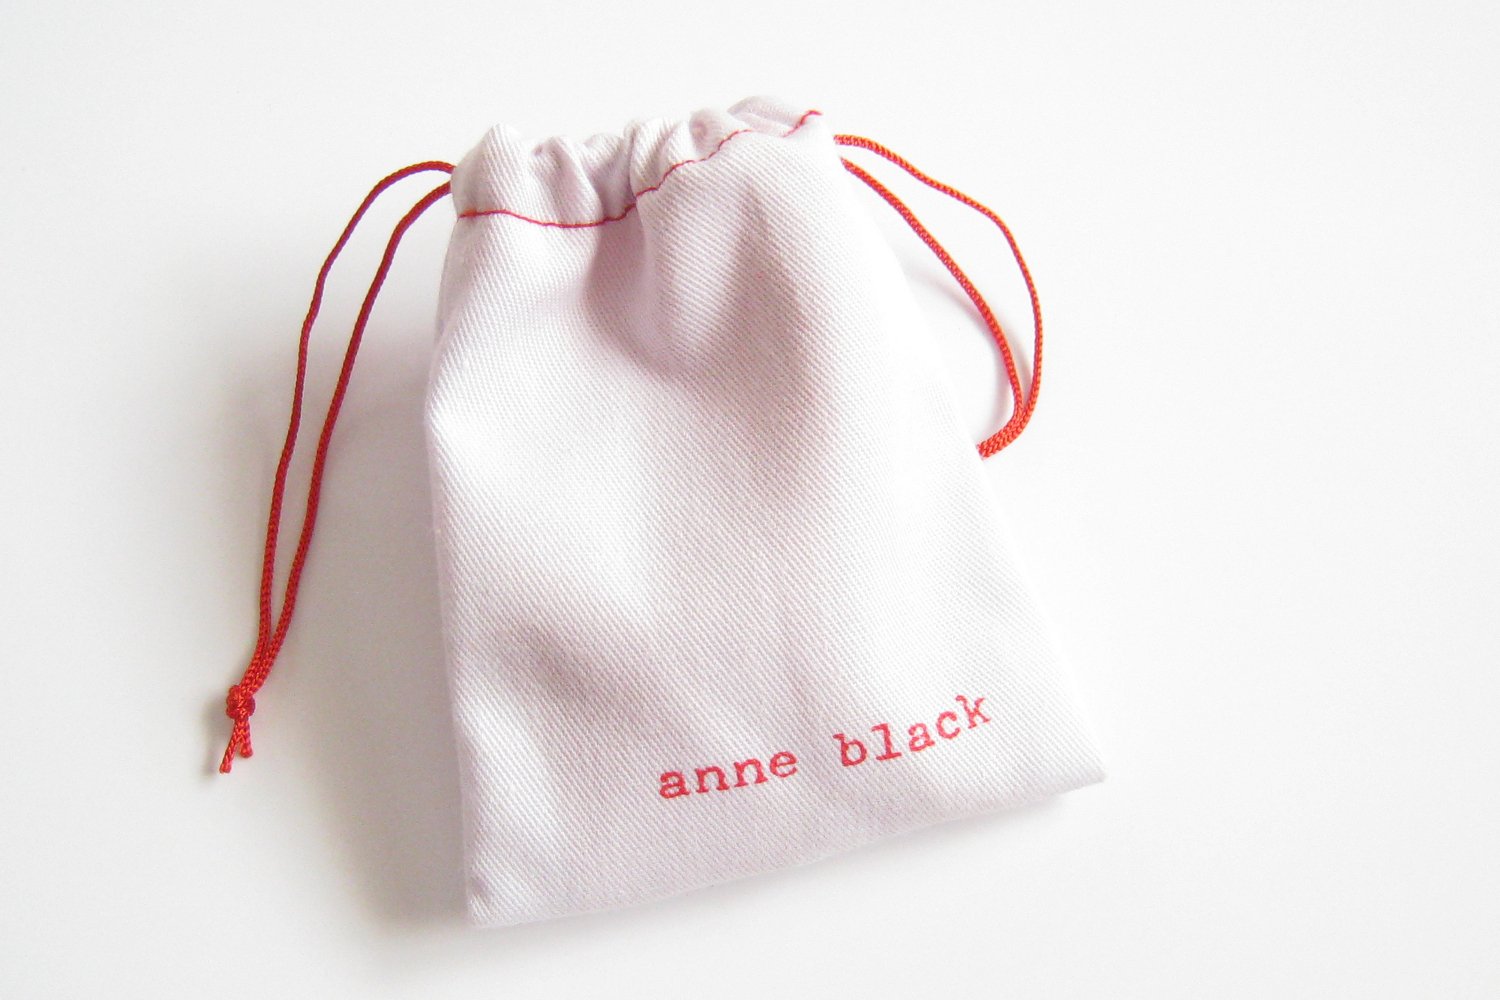 Anne Black アンヌ・ブラック 北欧 アクセサリー サステナブルファッション エシカルジュエリー